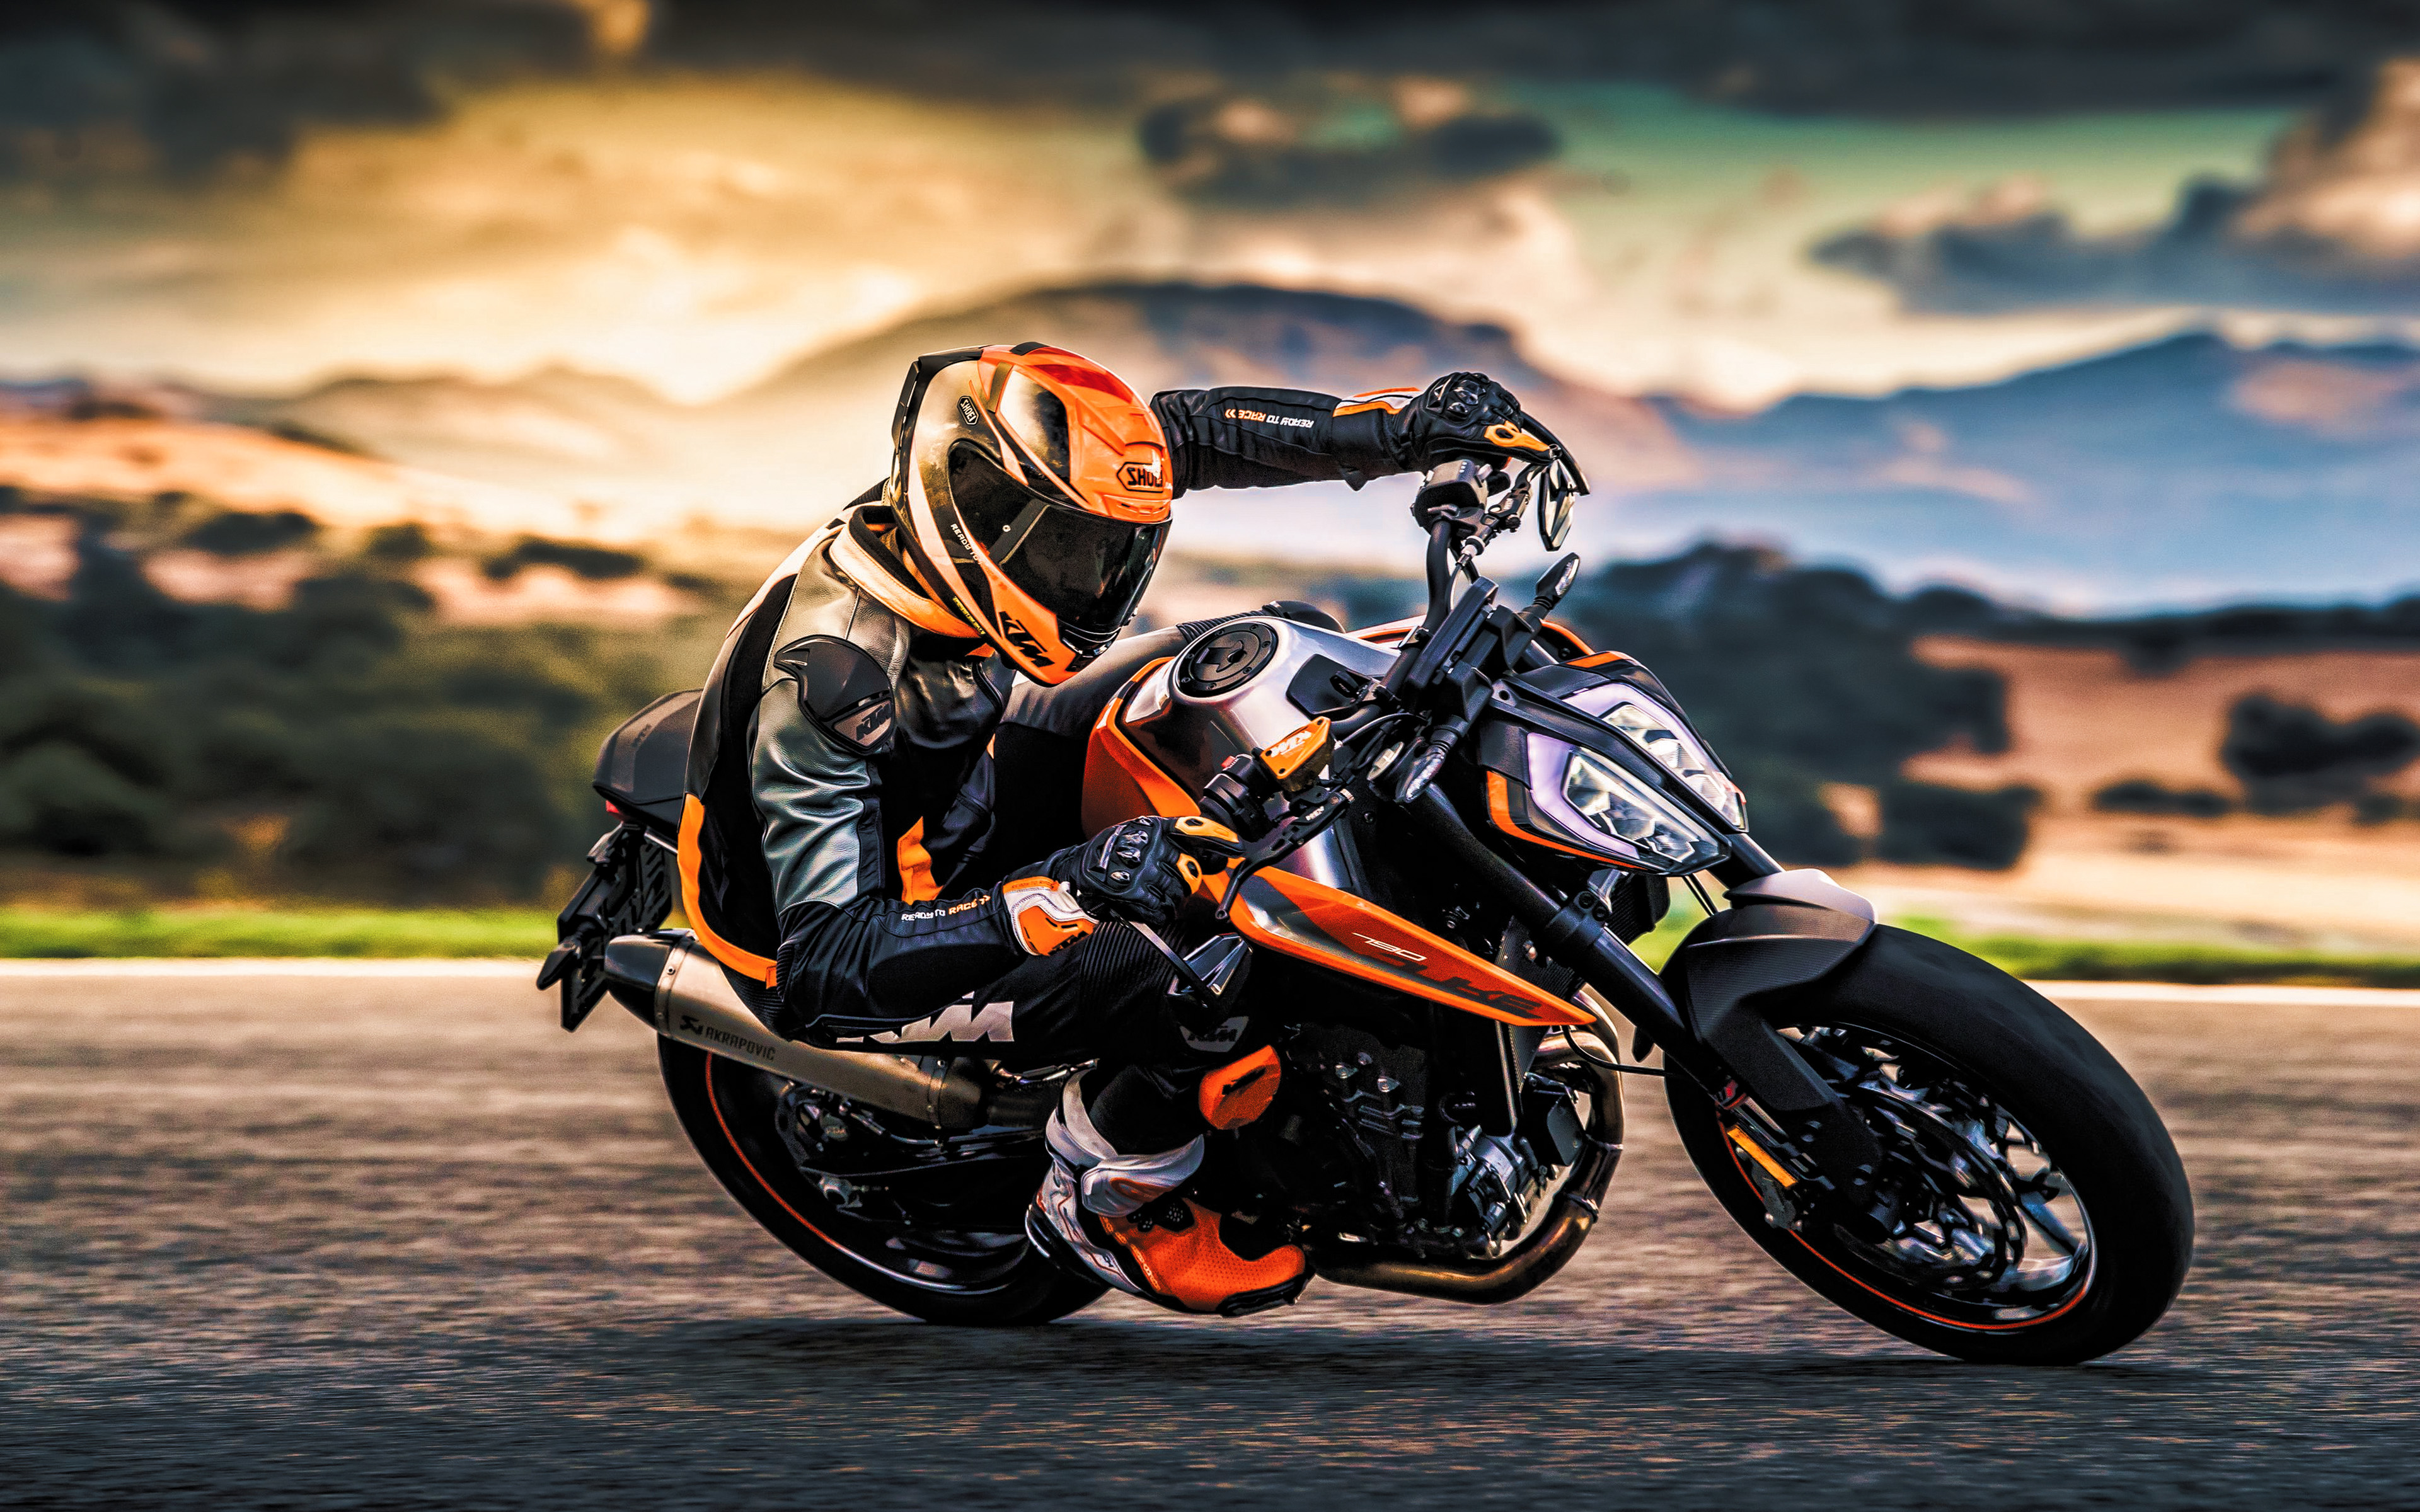 Download wallpaper KTM 790 Duke, 4k, superbikes, 2020 bikes, HDR, 2020 KTM 790 Duke, austrian motorcycles, KTM for desktop with resolution 3840x2400. High Quality HD picture wallpaper